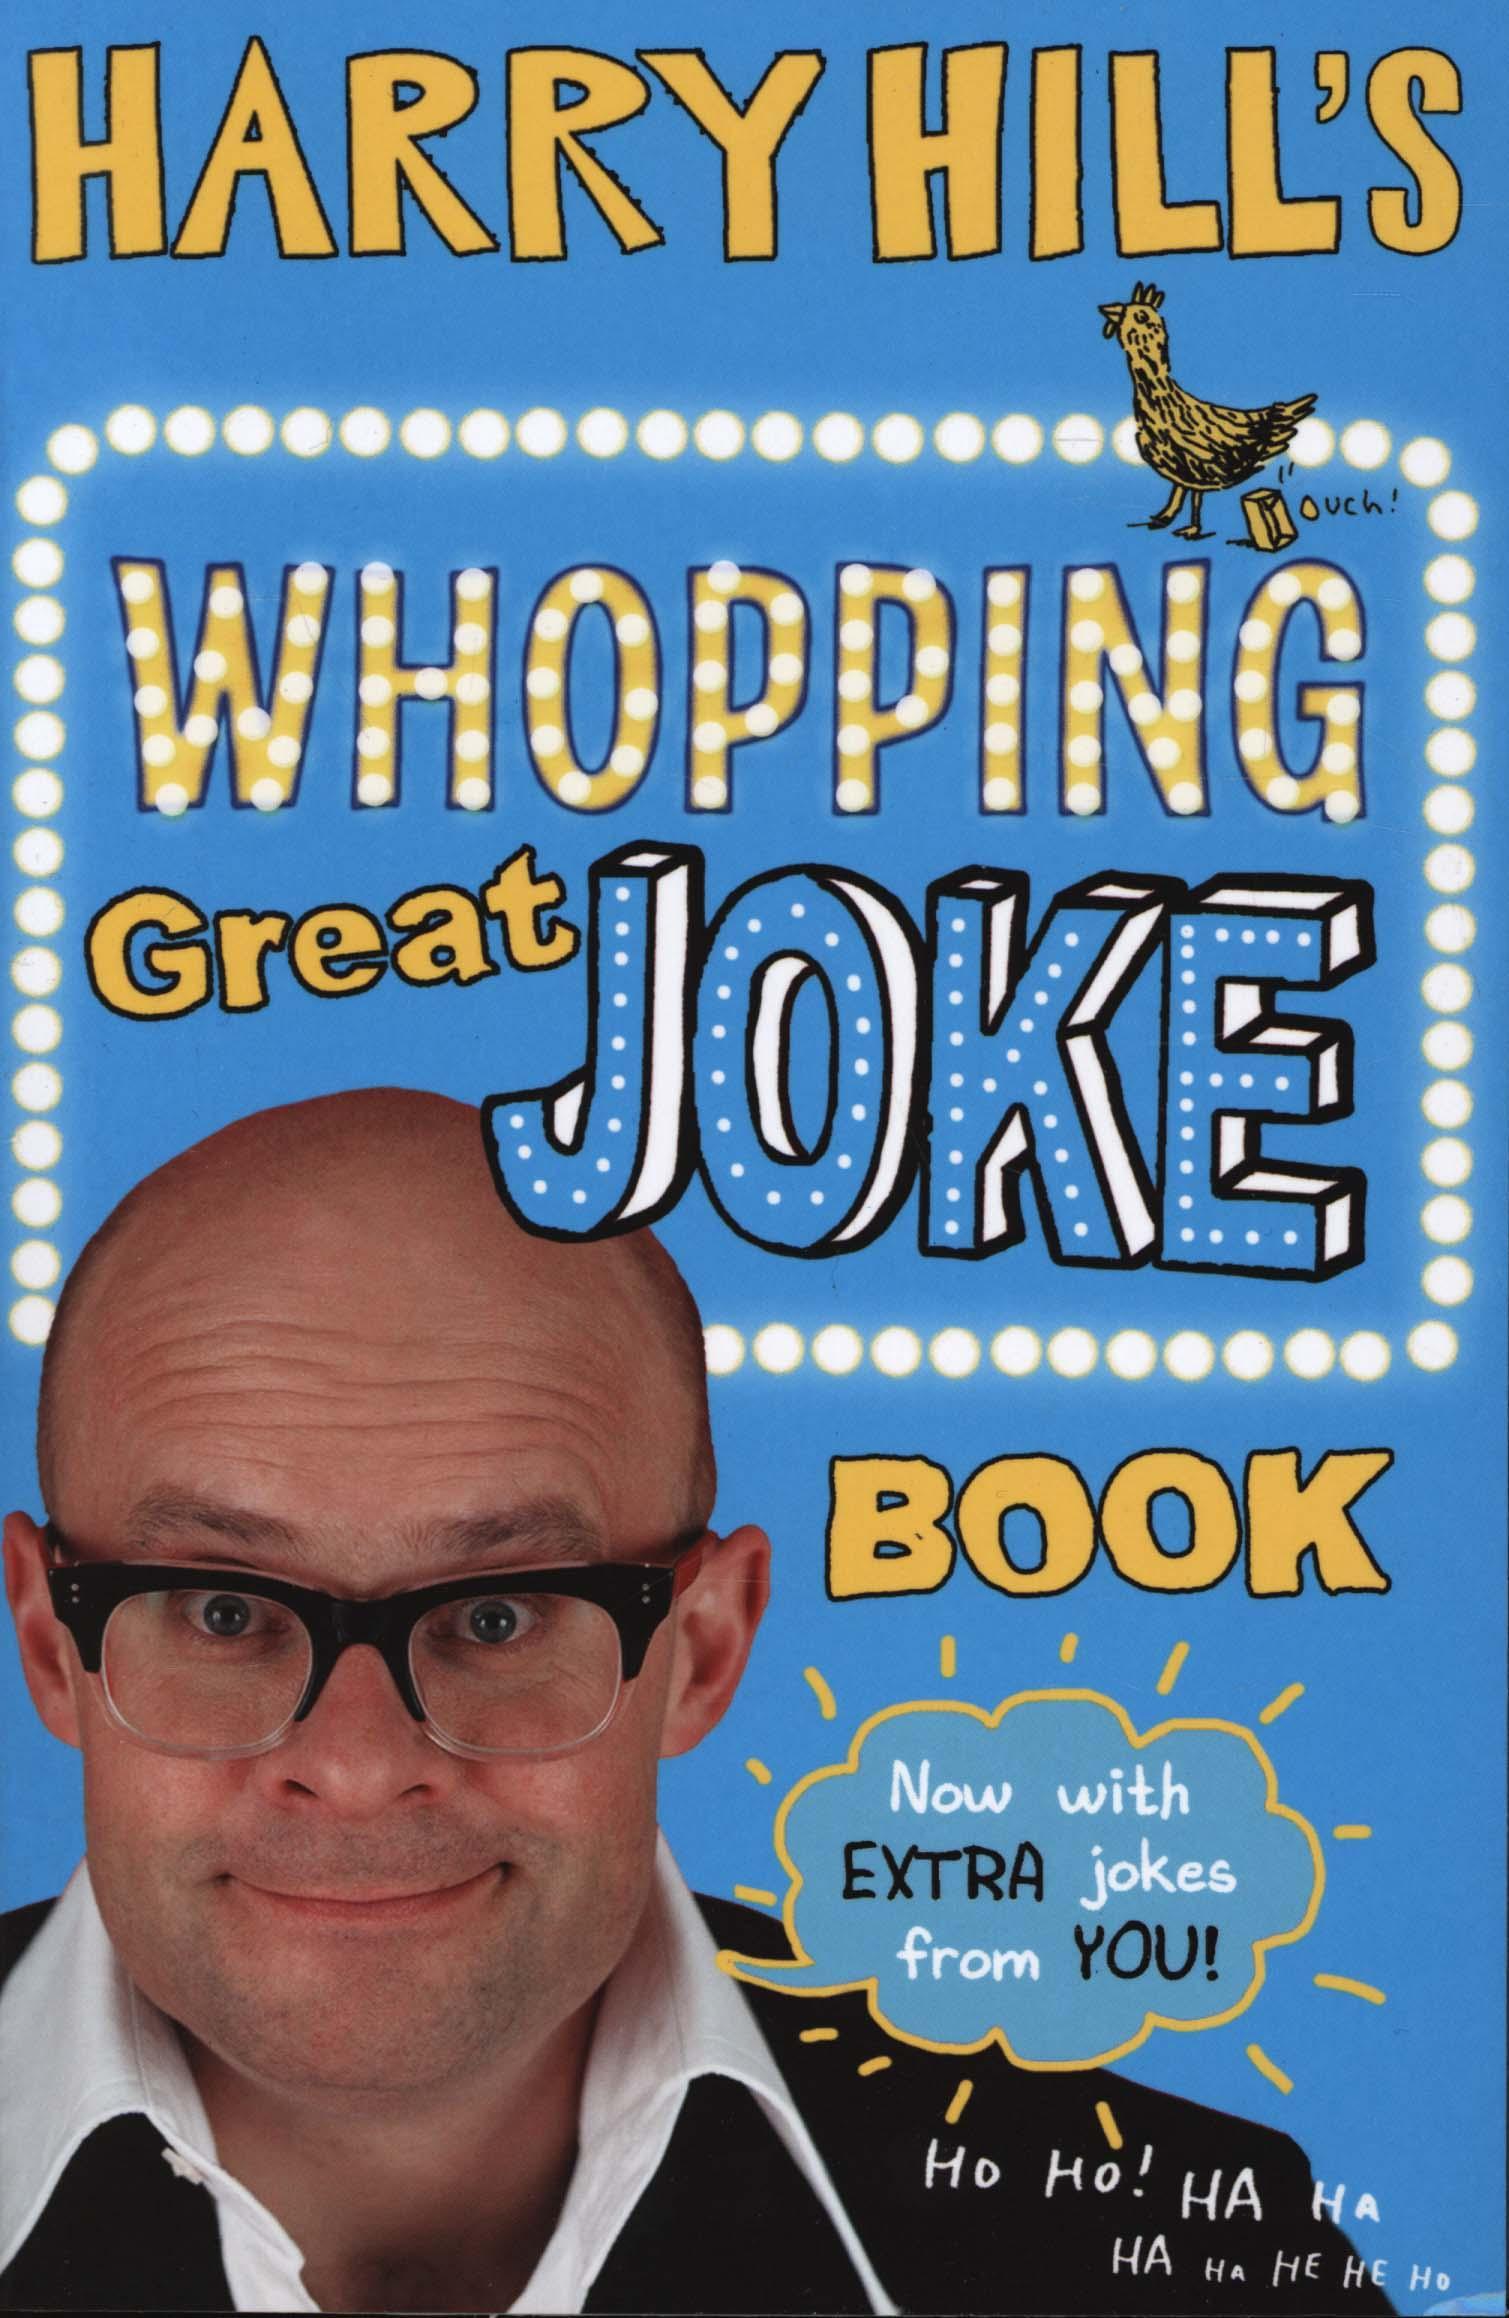 Harry Hill's Whopping Great Joke Book - Harry Hill